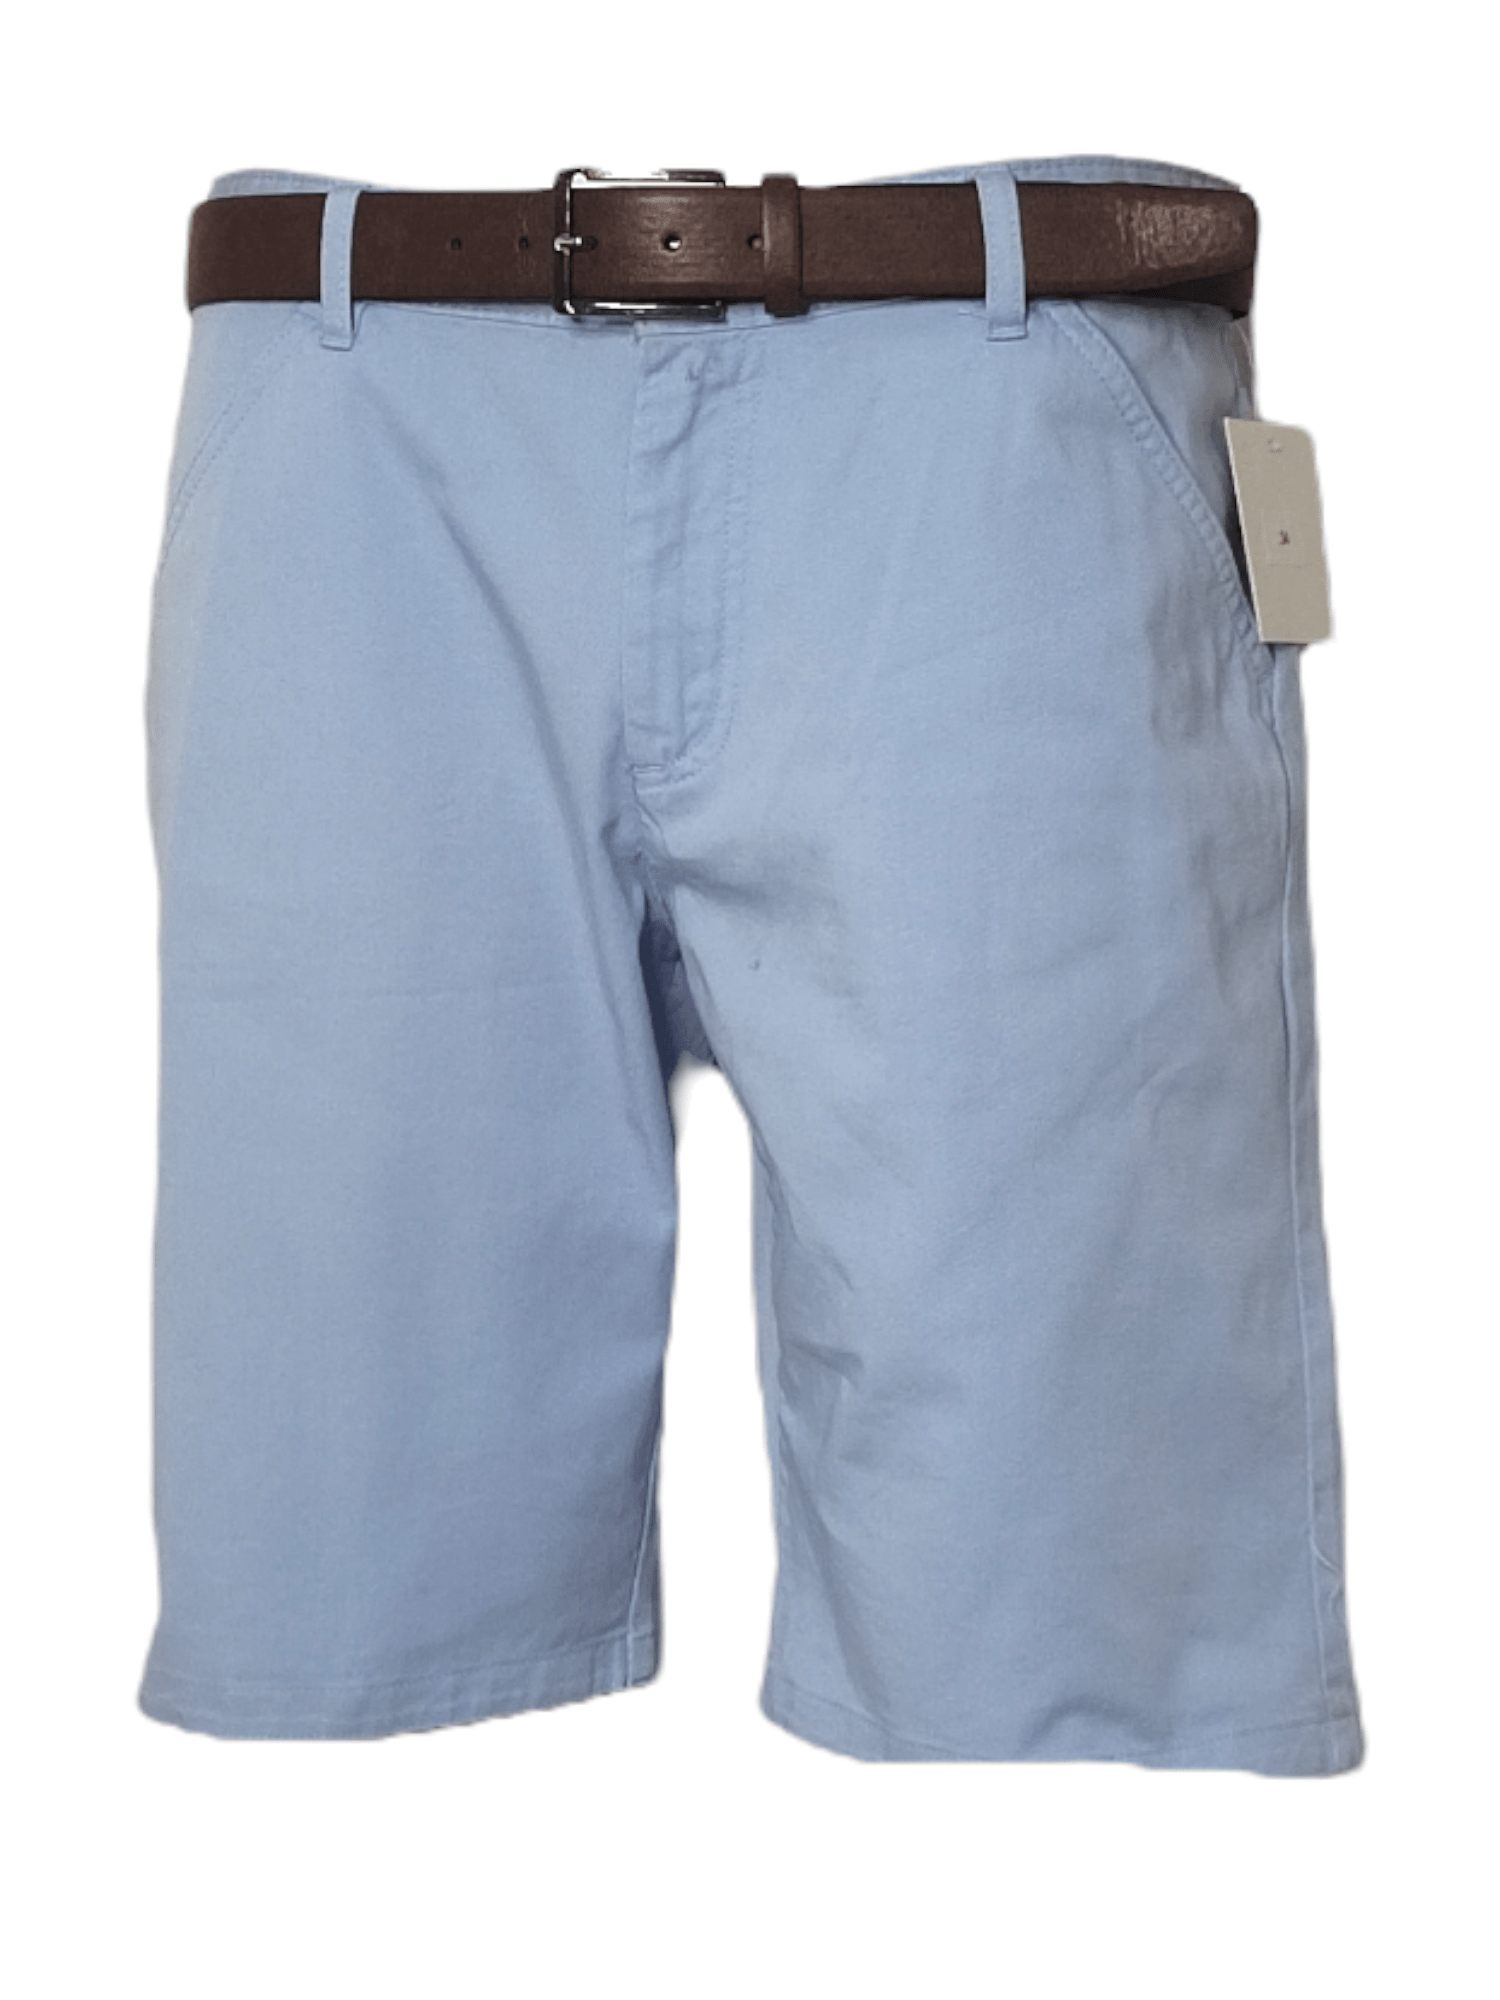 ElOutlet - Men Summer Men Shorts Men Shorts - Light Blue